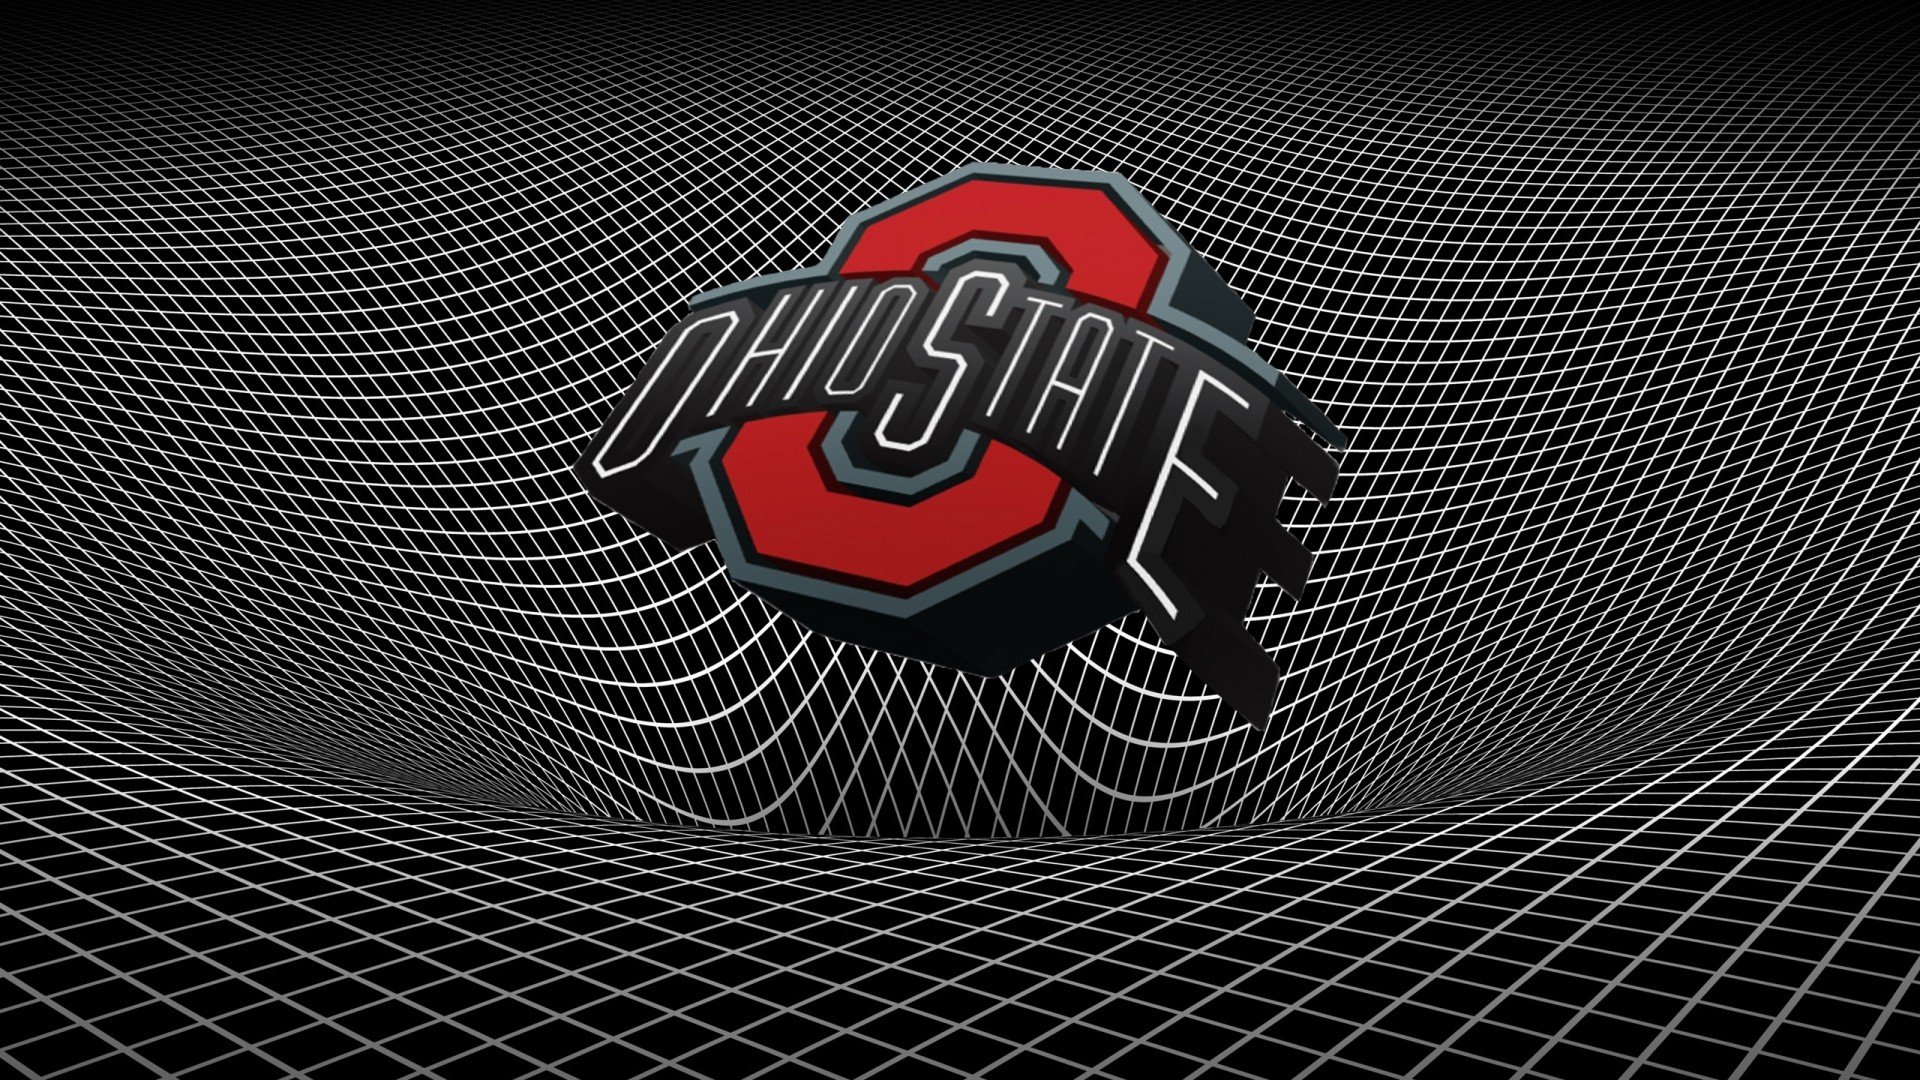 Logos Ohio State Football Teams Wallpaper Background